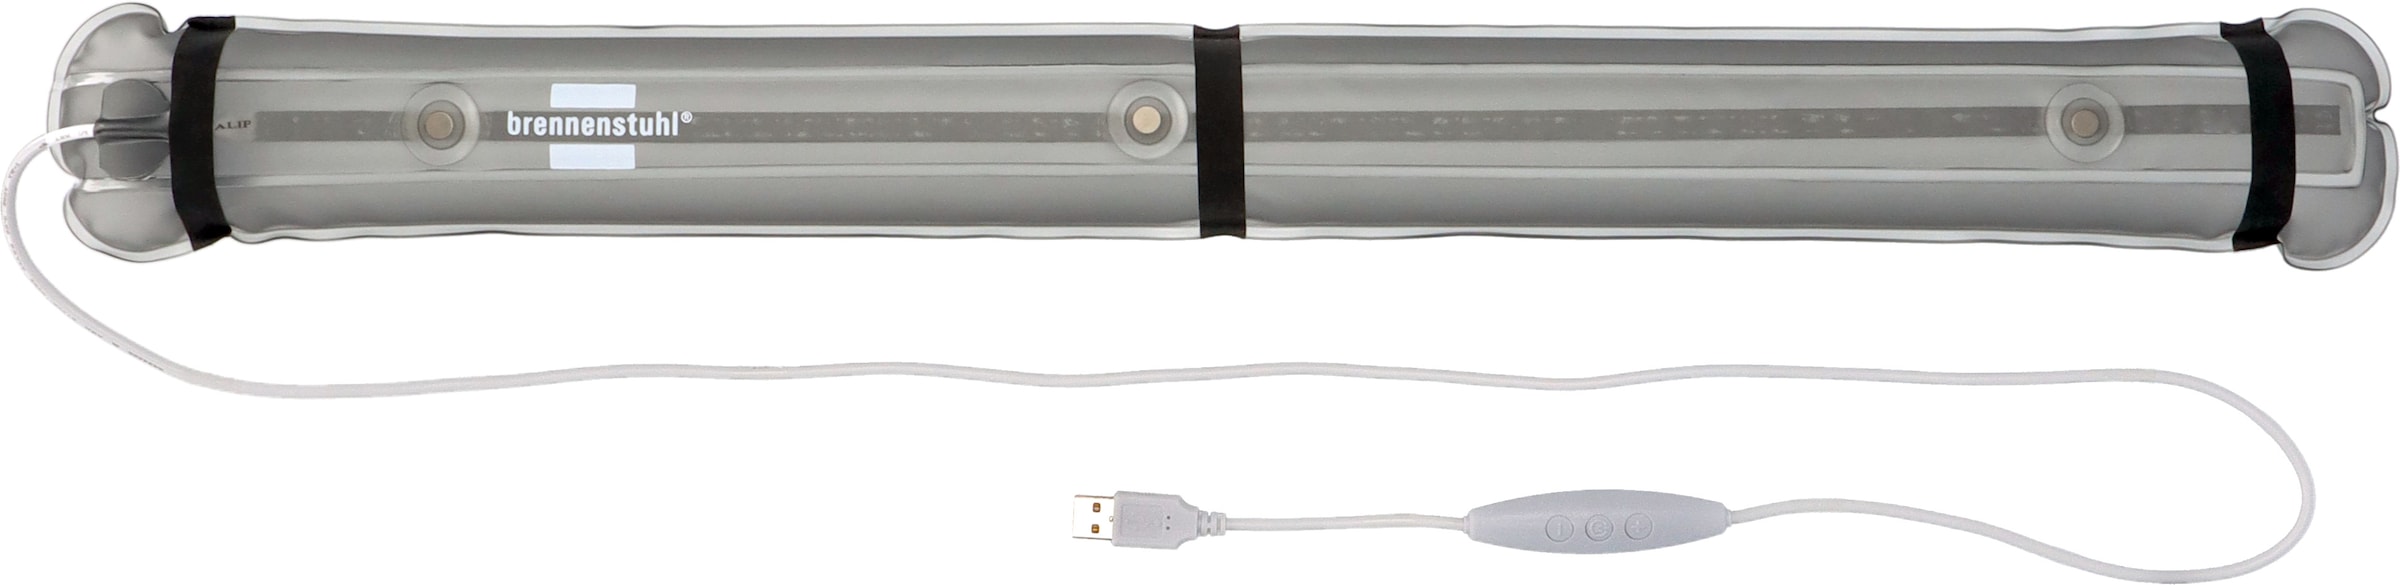 Brennenstuhl LED Gartenleuchte »OLI Air 1«, aufblasbar, stufenlos dimmbar, faltbare LED Röhre mit 1m USB Kabel